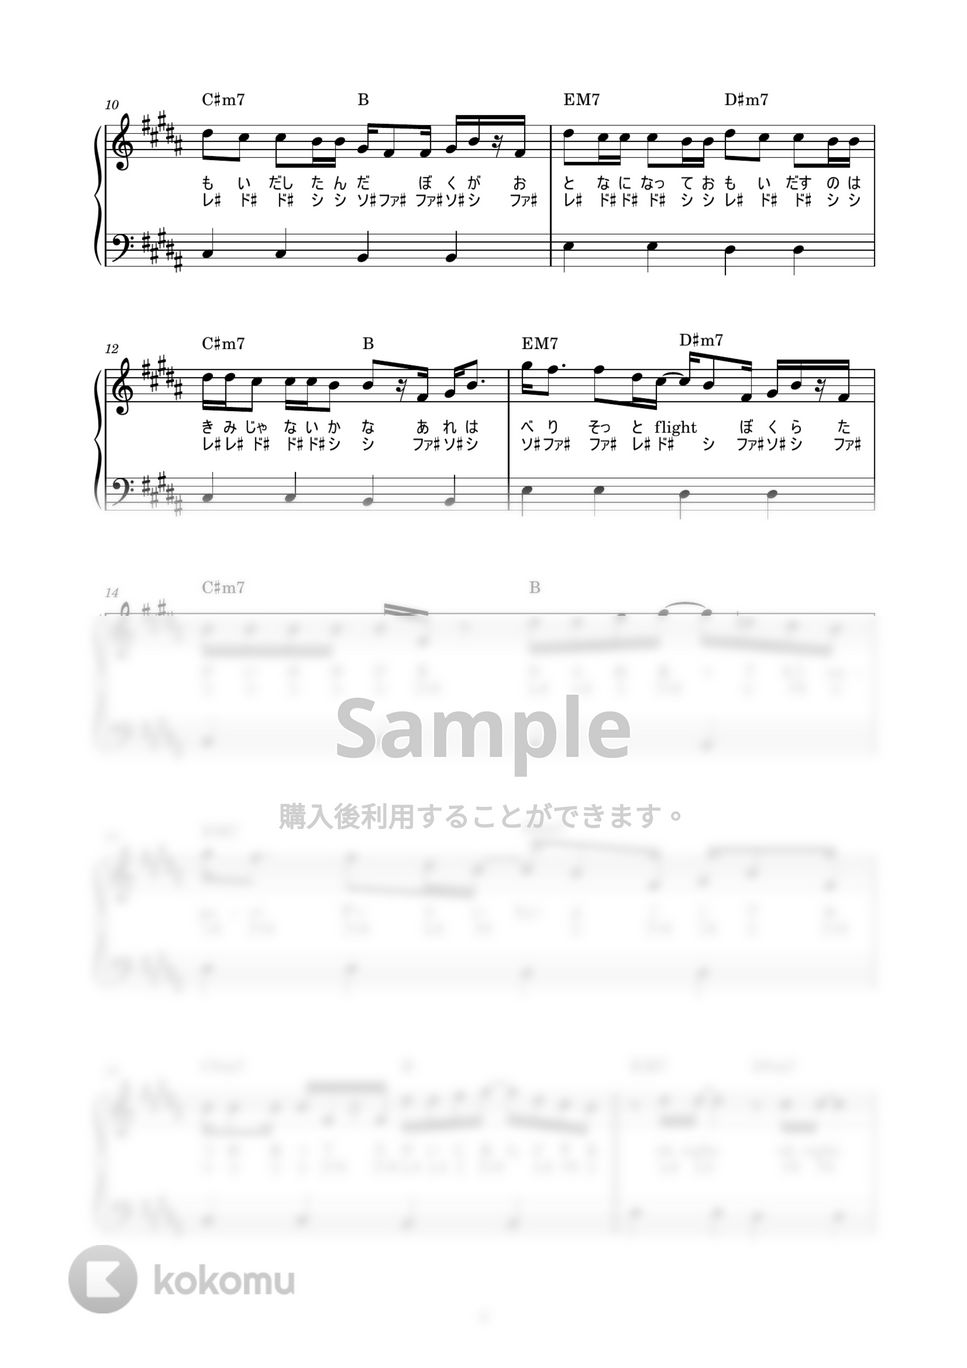 Vaundy - napori (かんたん / 歌詞付き / ドレミ付き / 初心者) by piano.tokyo